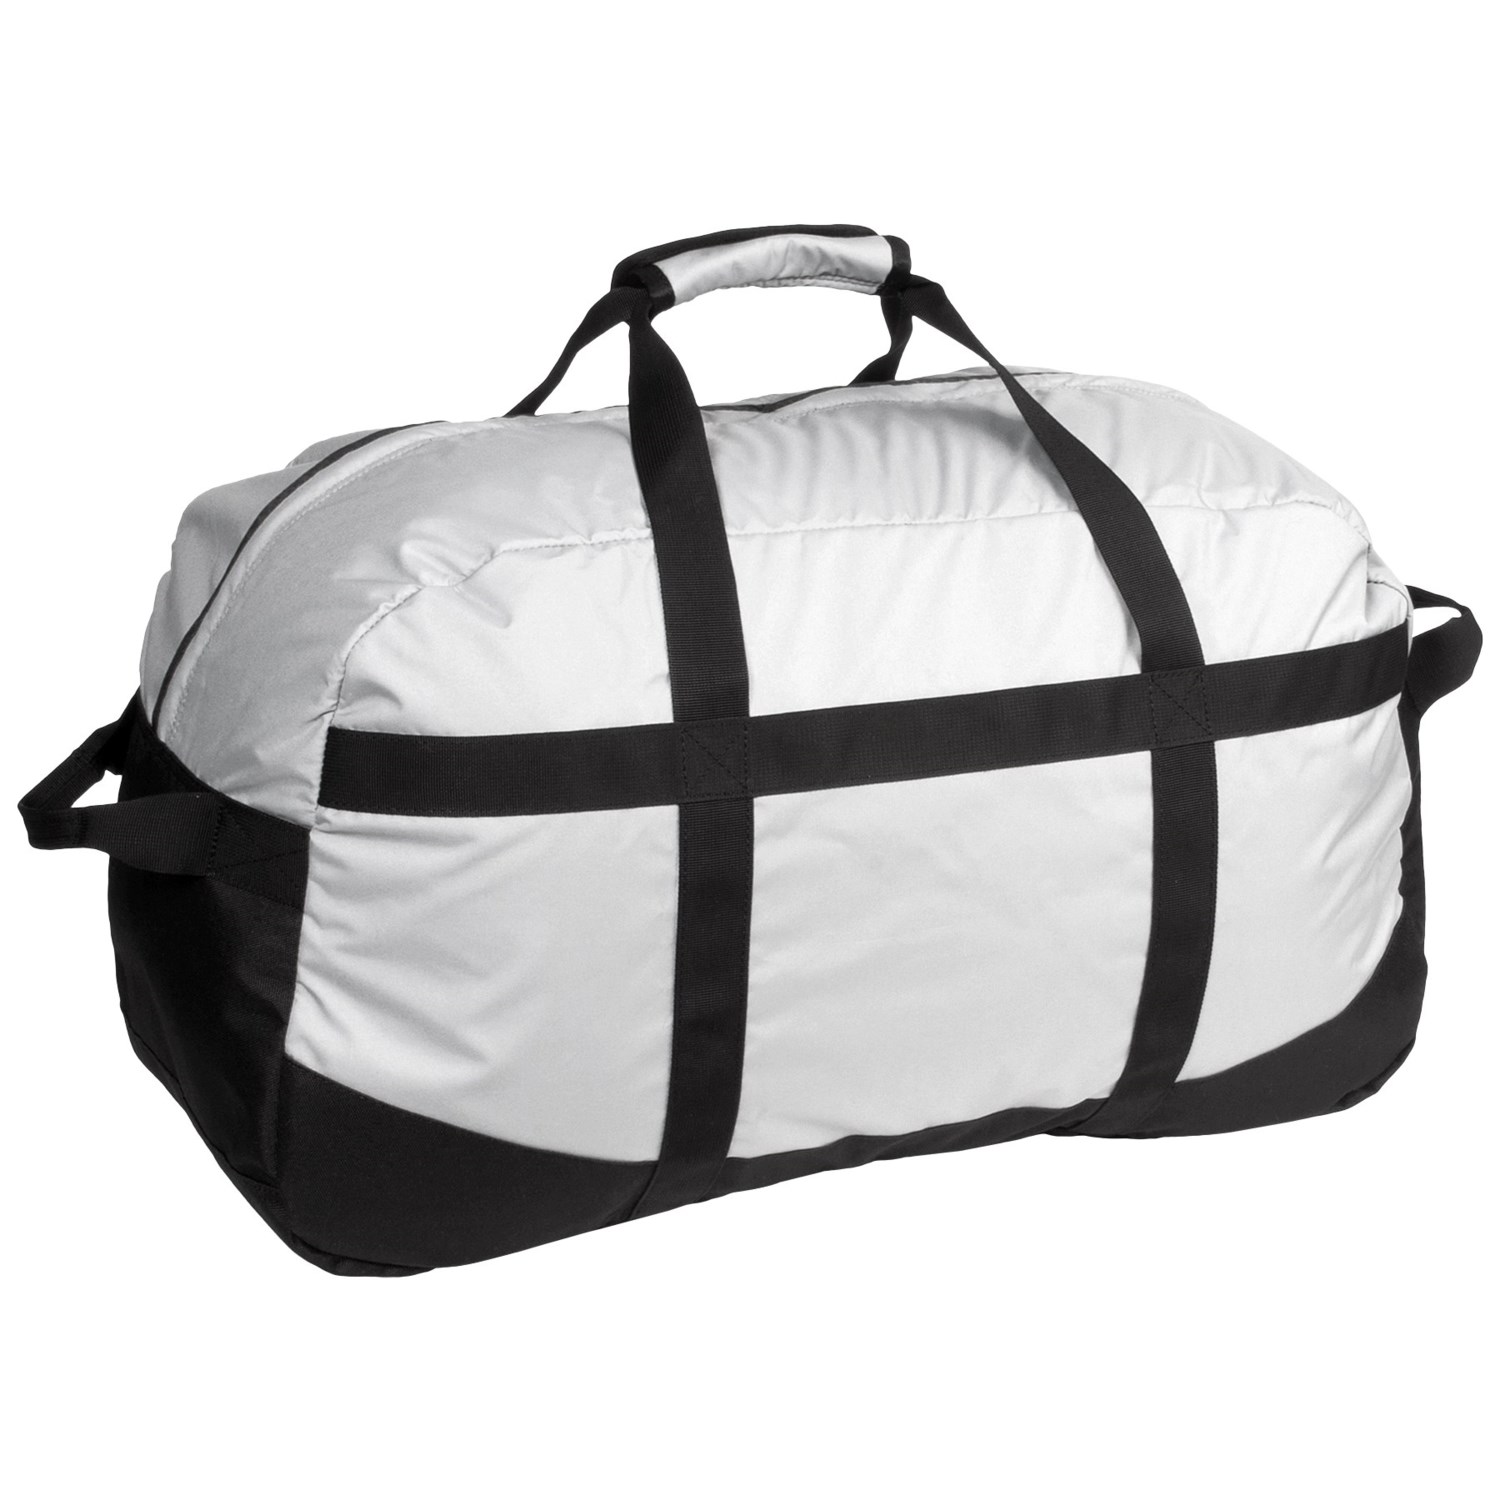 Mountainsmith Travel Duffel Bag - Large - Save 41%